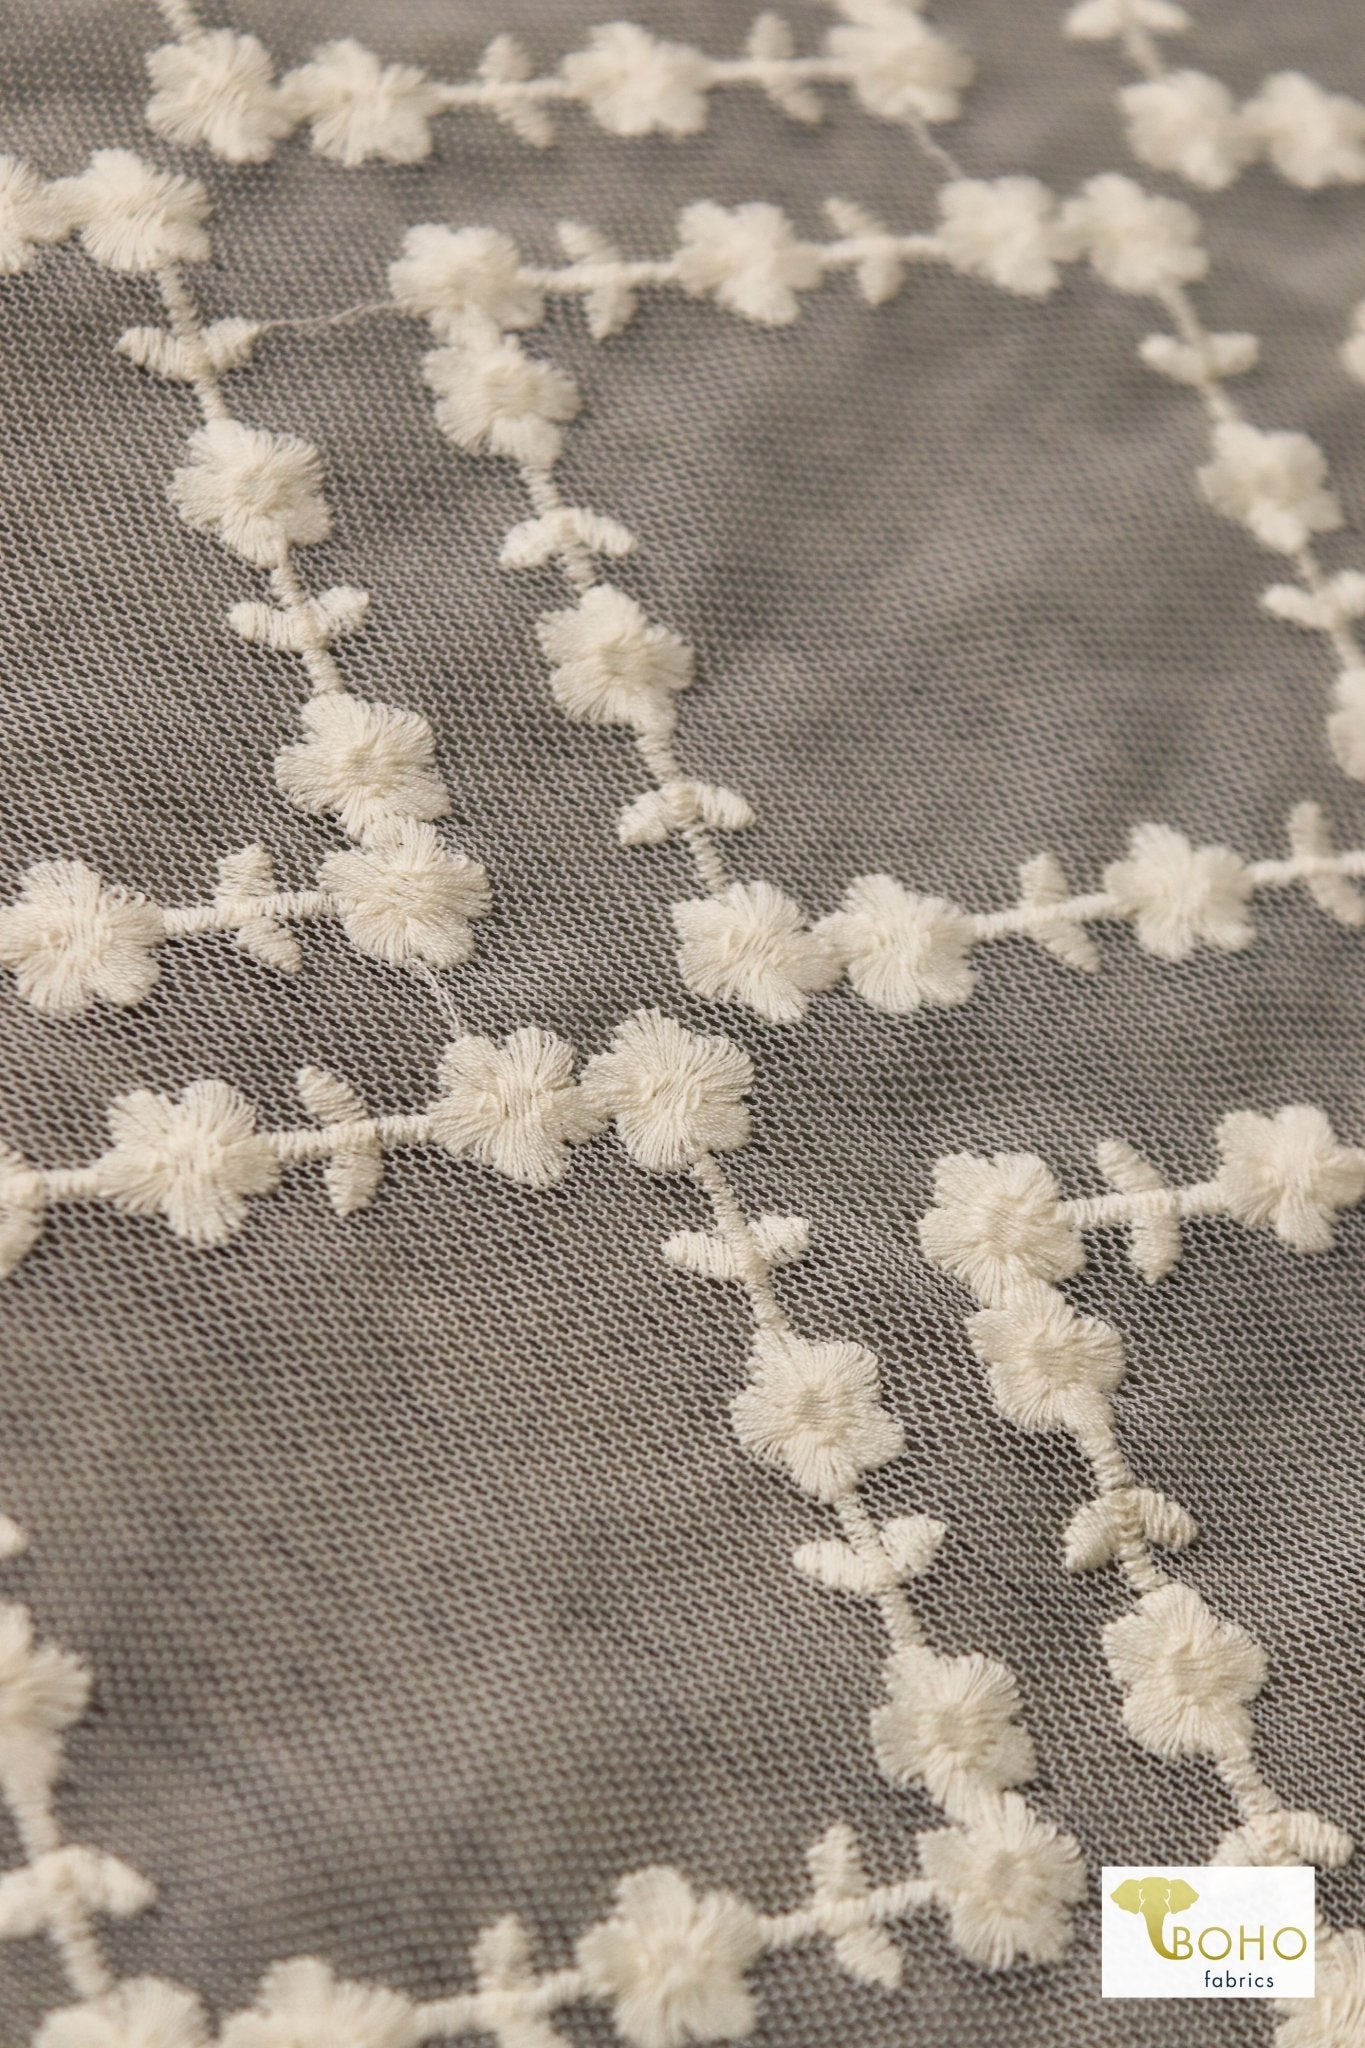 Floral Diamond Embroidery. Special Occasion Fabric. - Boho Fabrics